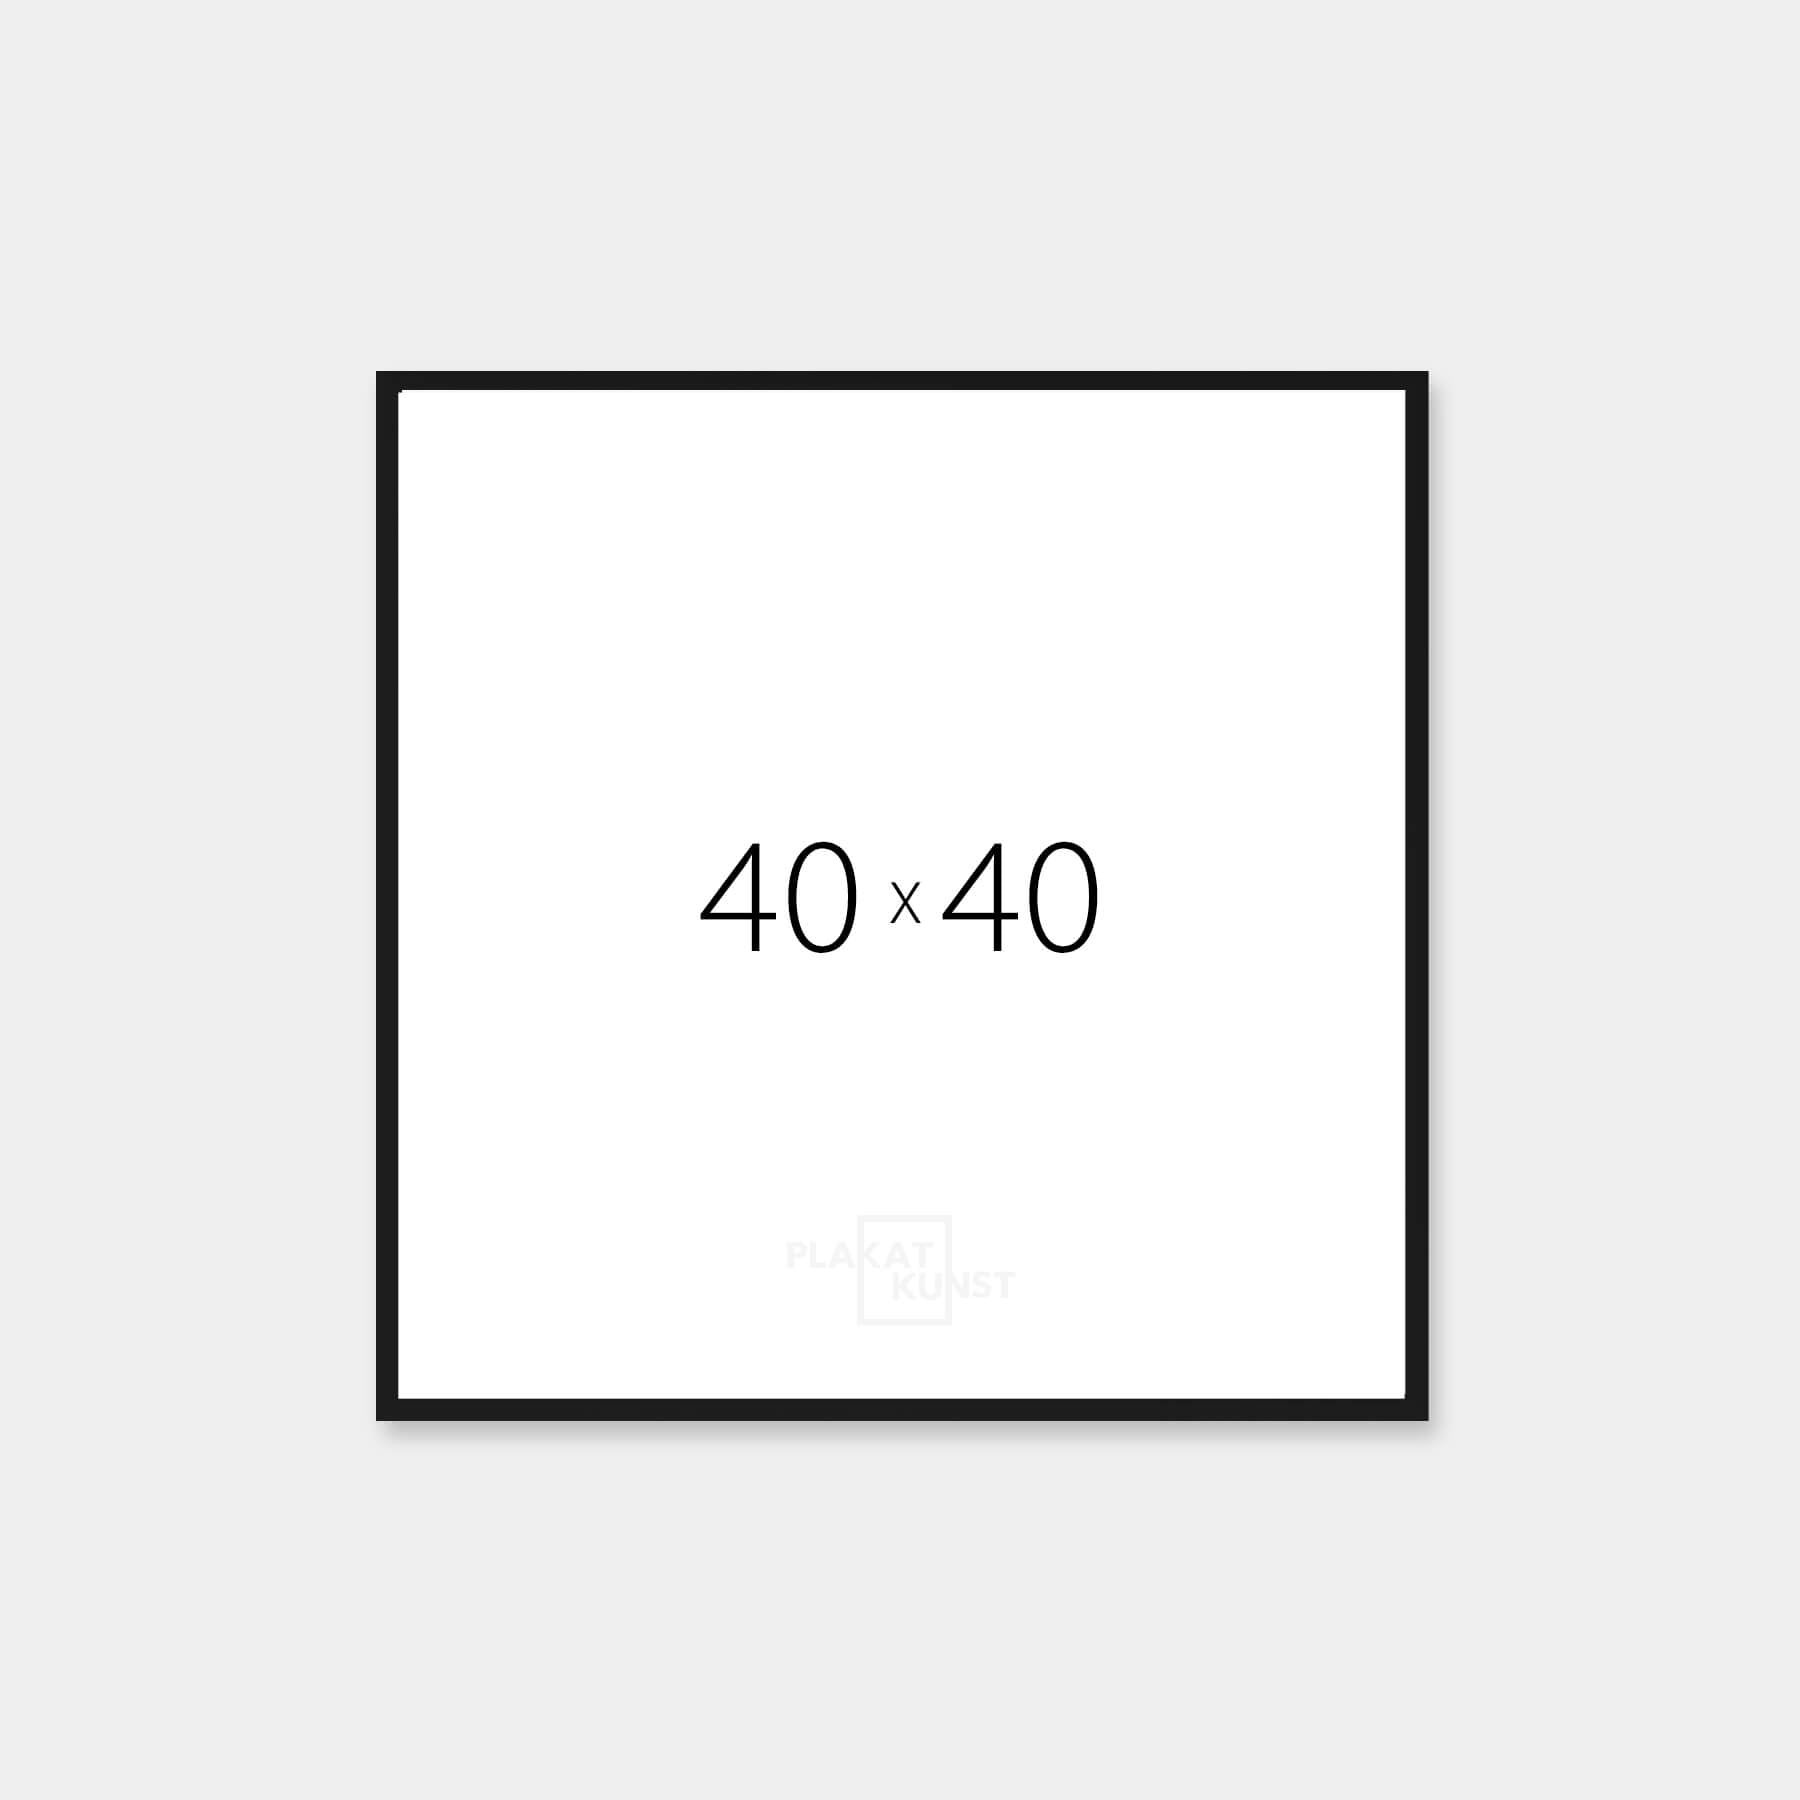 Sort aluramme - Smal (9 mm) - 40x40 cm